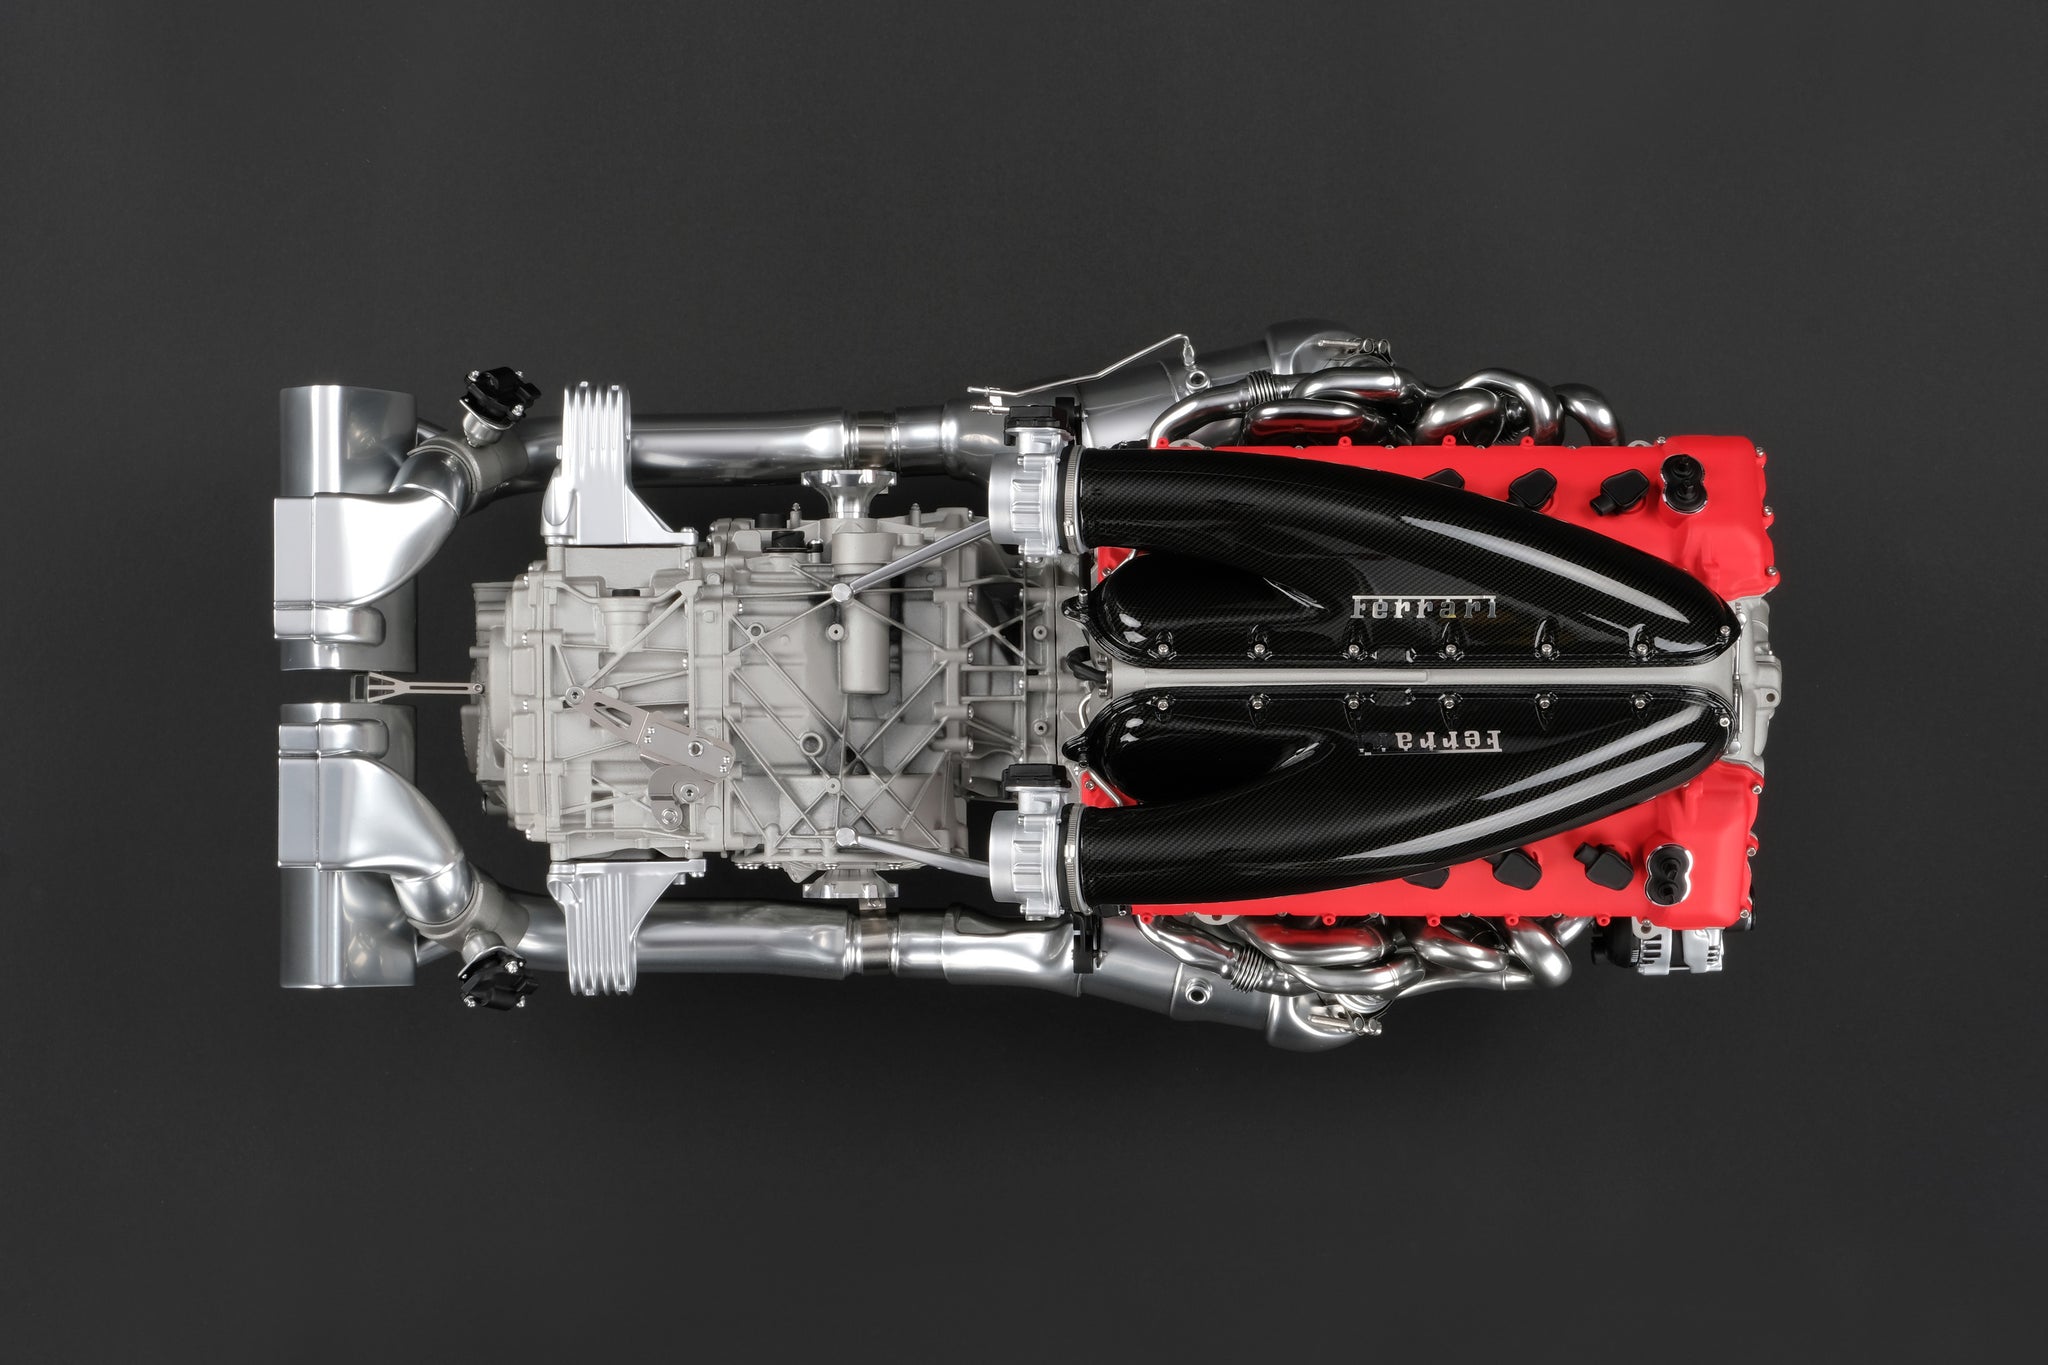 Ferrari Daytona SP3 Engine and Gearbox 1.4 Scale Replica by Amalgam Collection